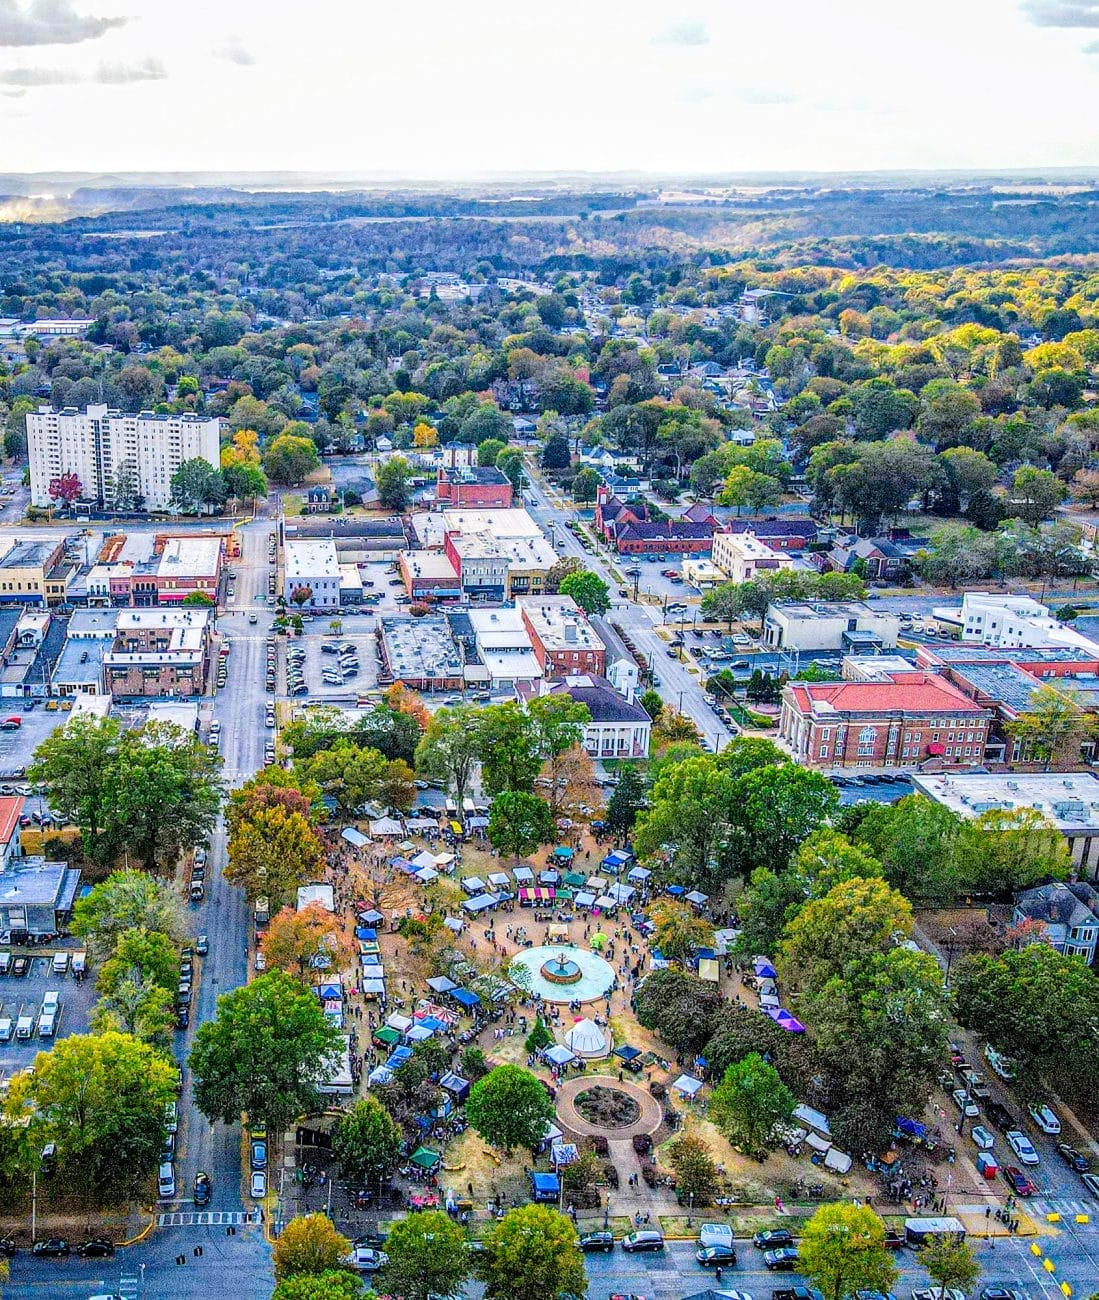 Alabama Renaissance Faire Aerial View